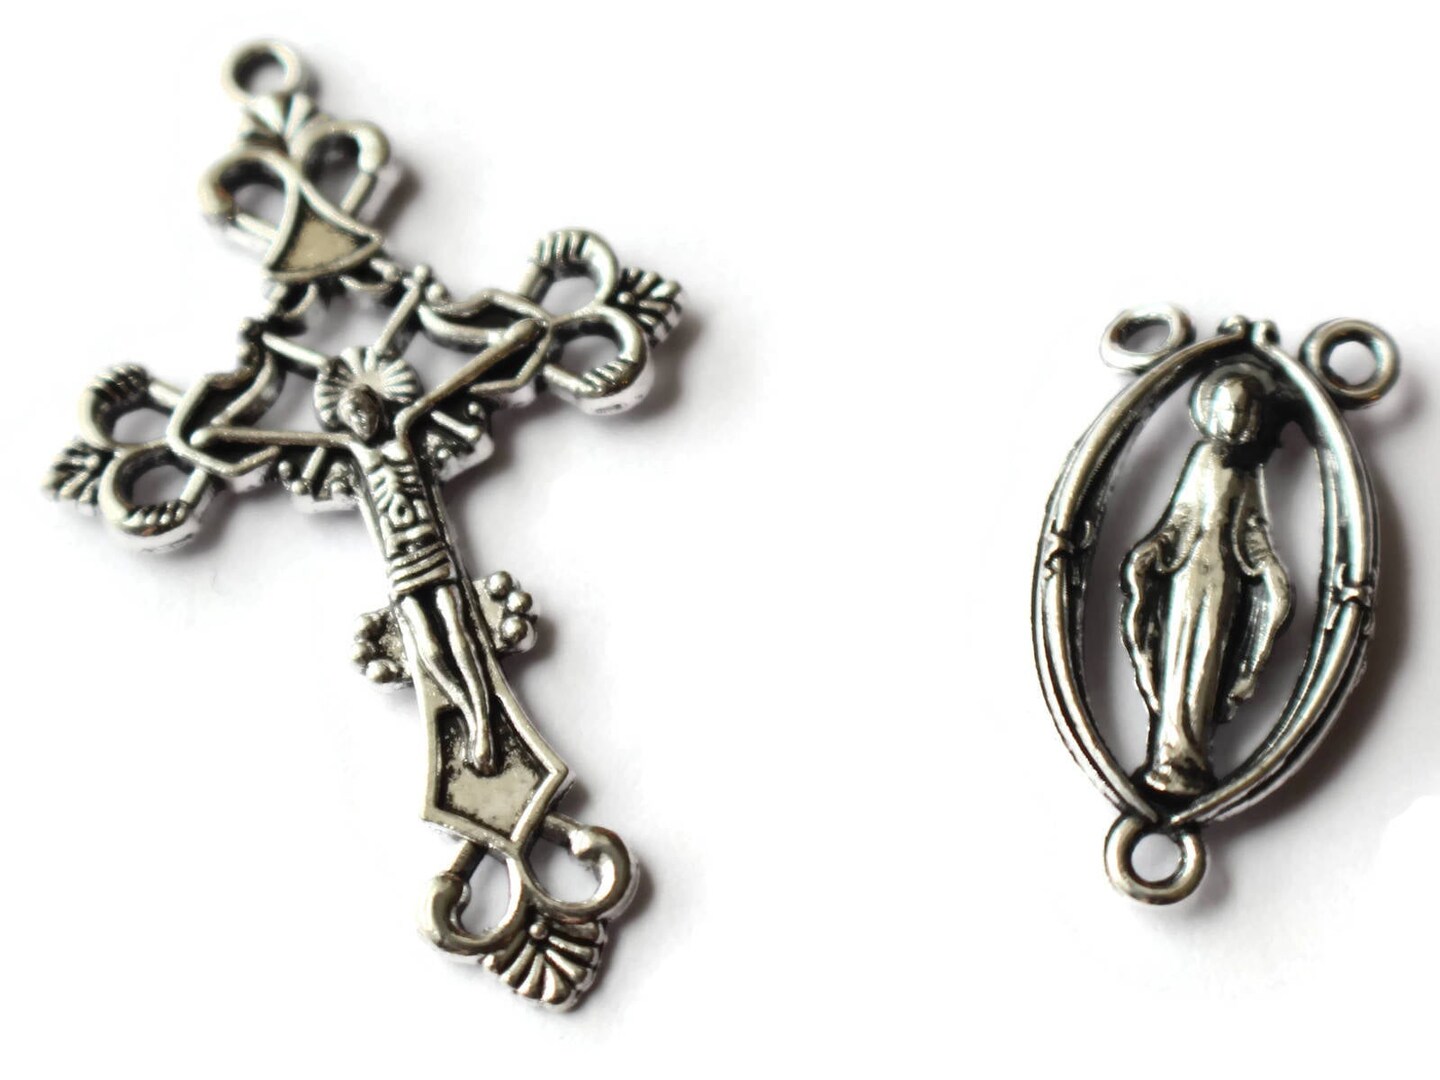 BULK 30 Copper Crucifix Cross Charm Pendant for Rosary Parts 29x22mm by  TIJC SP1135B